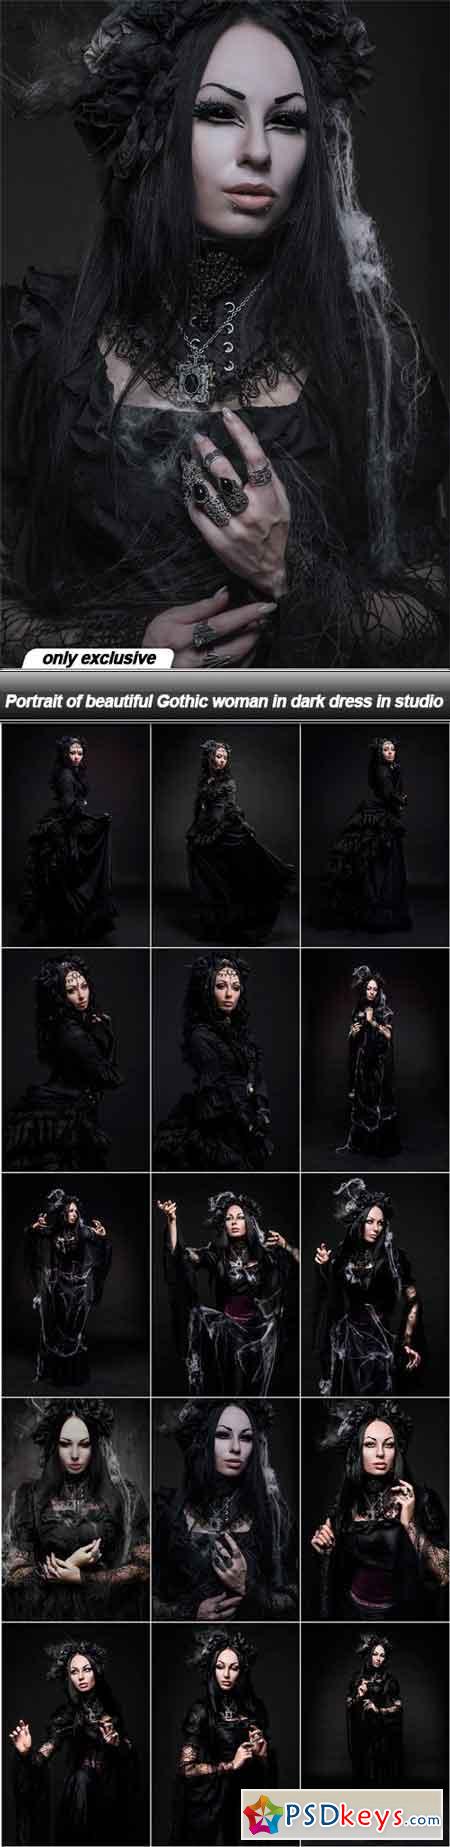 Portrait of beautiful Gothic woman in dark dress in studio - 15 UHQ JPEG